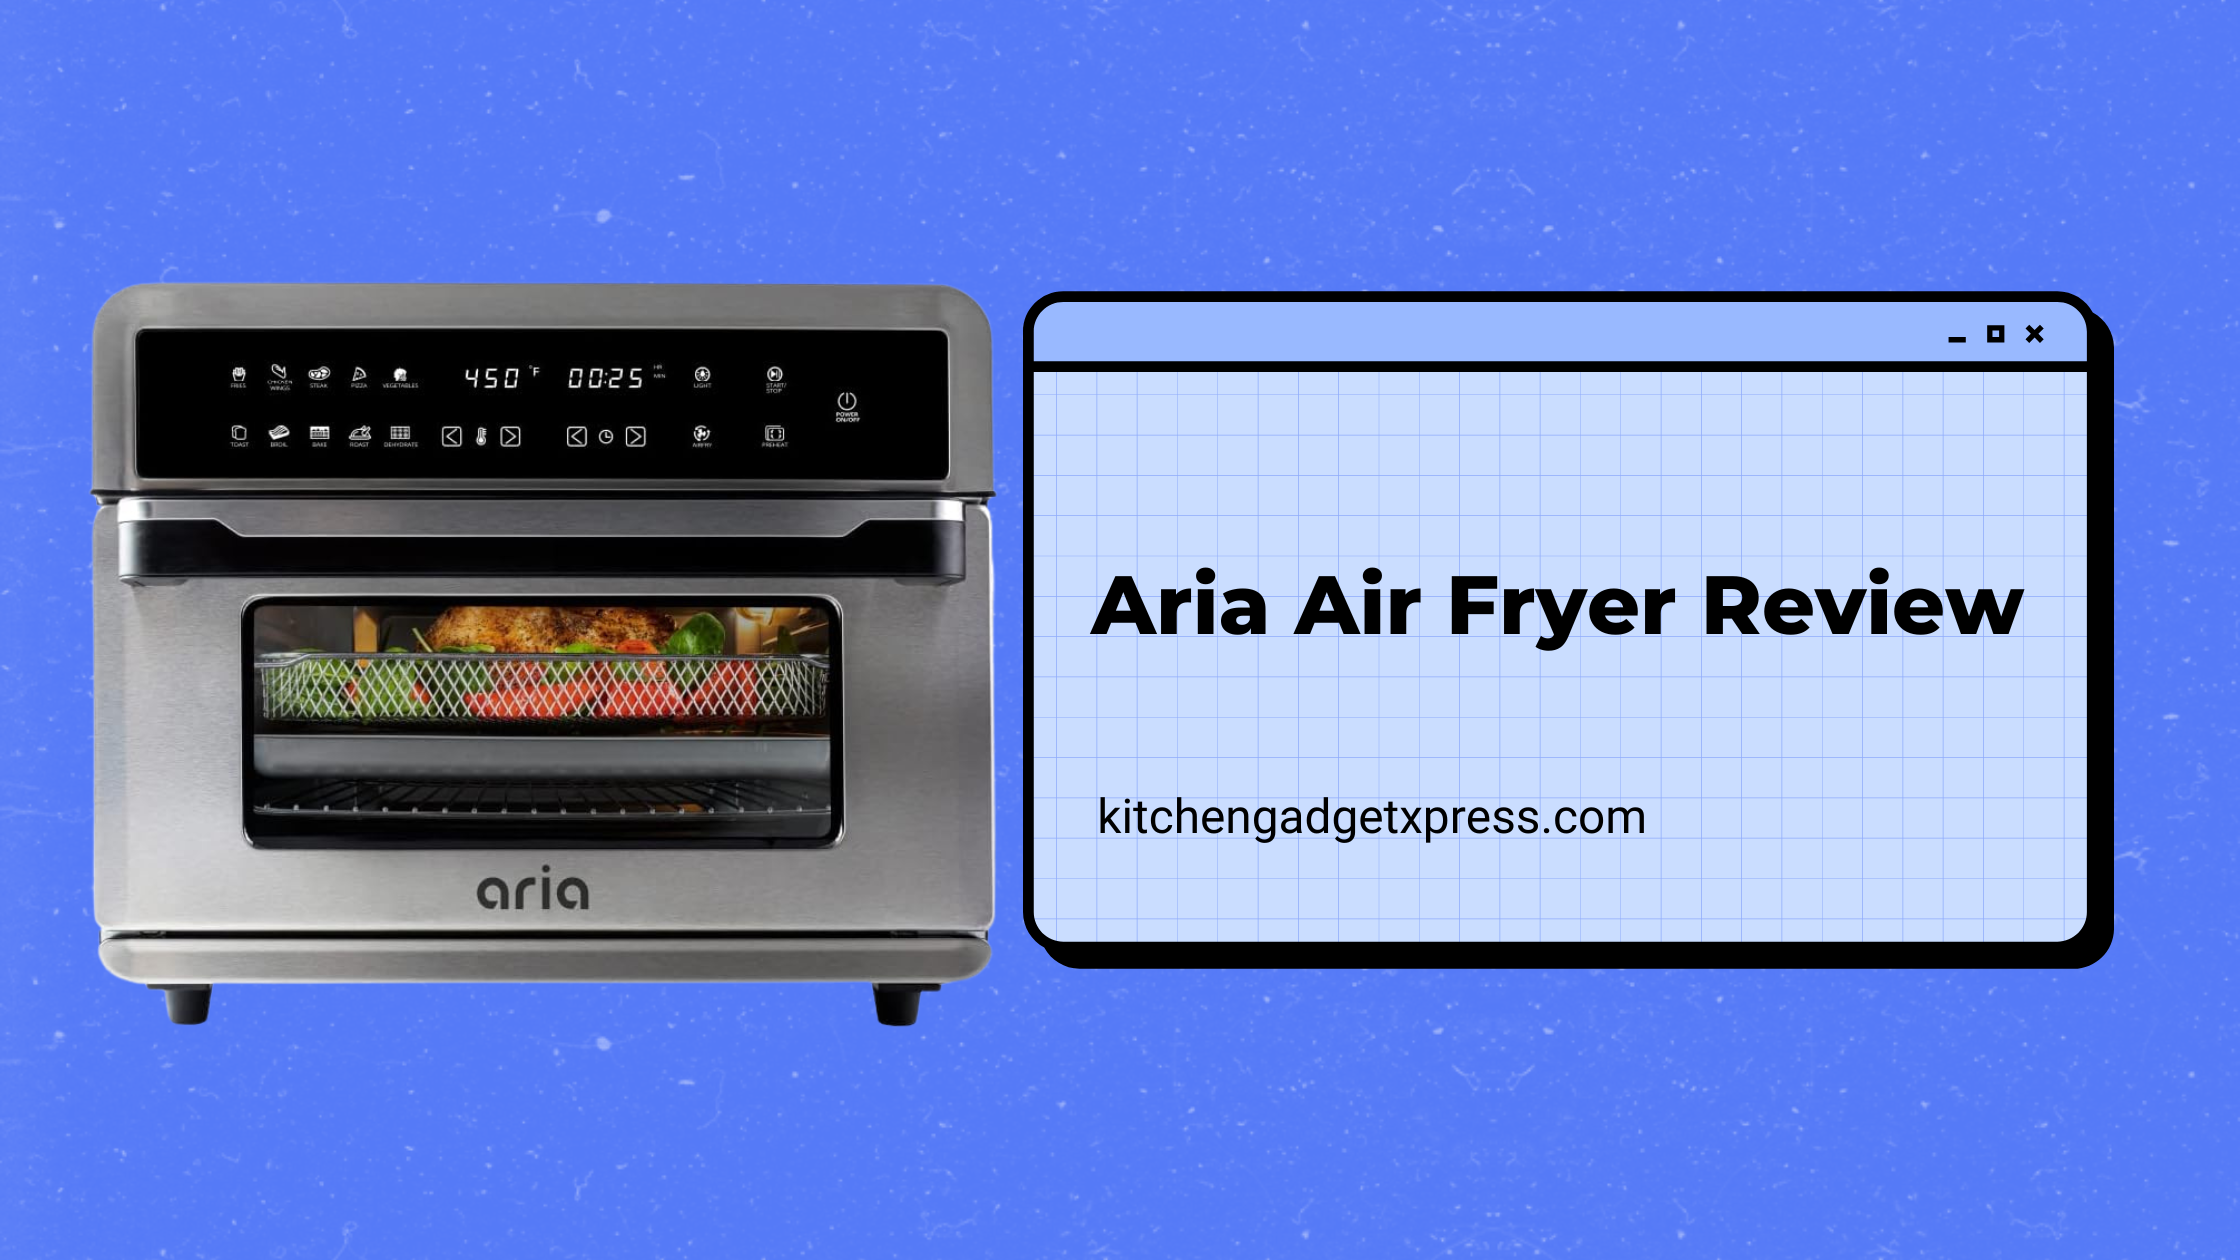 aria air fryer review